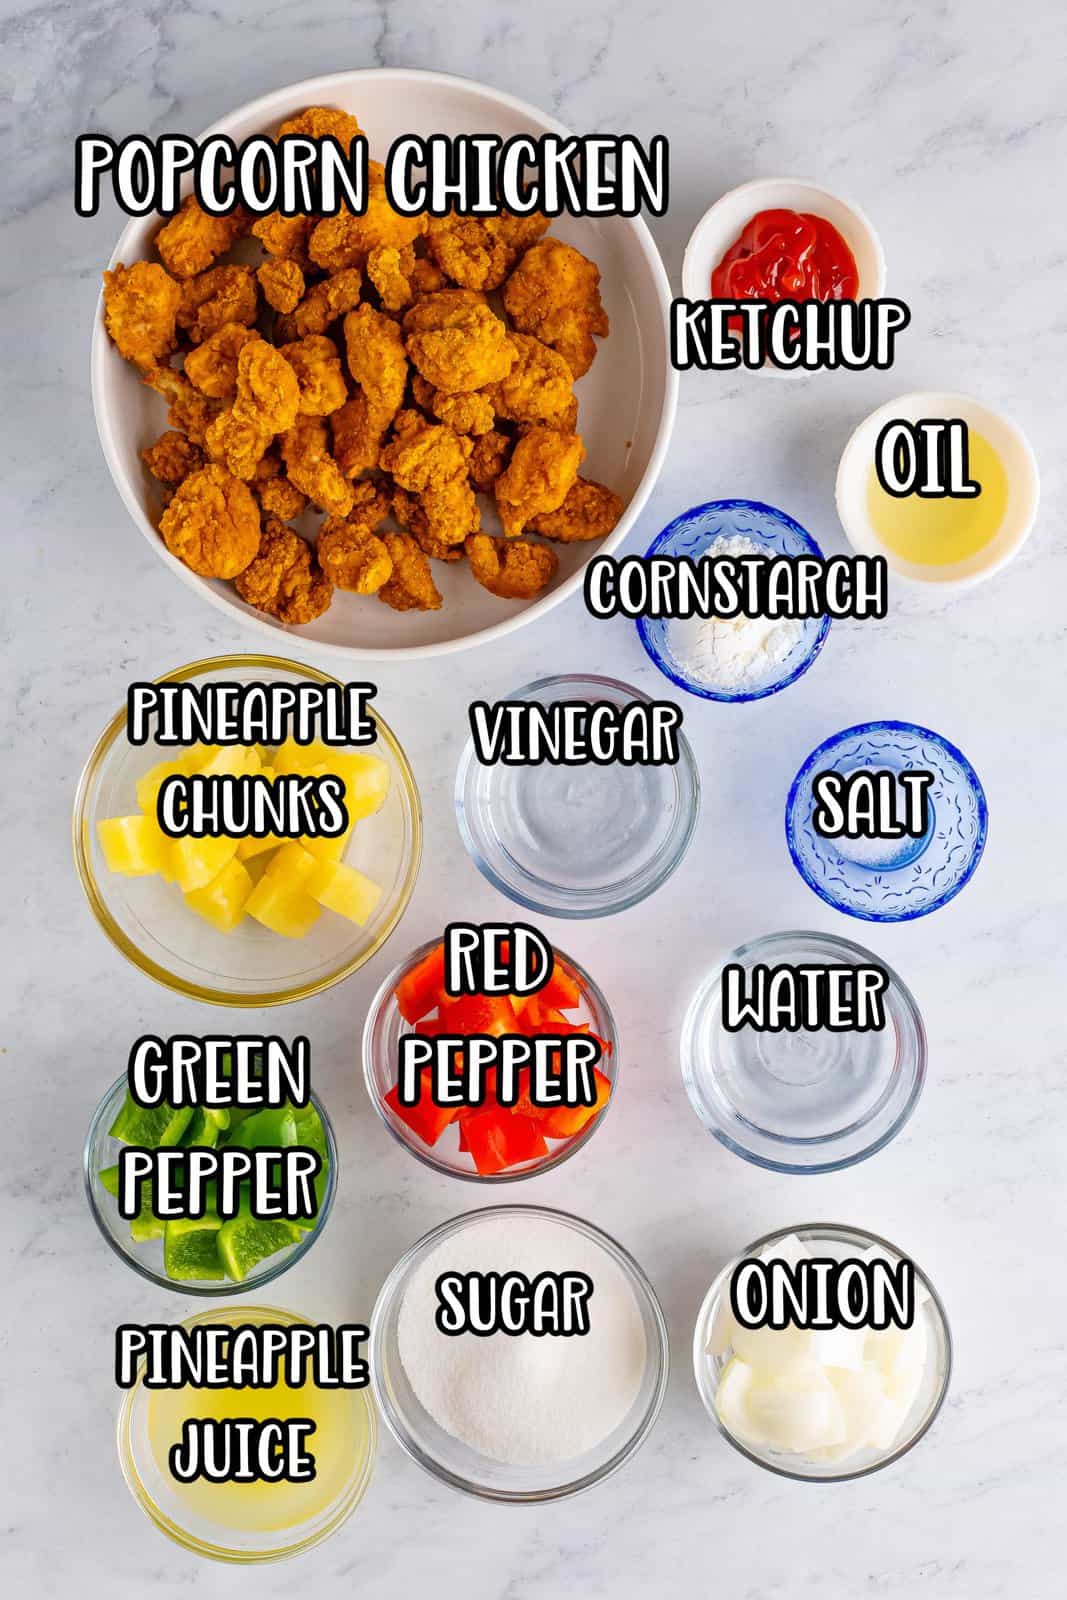 Vegetable oil, green pepper, red pepper, onion, water, pineapple juice, white vinegar, sugar, ketchup, salt, cornstarch, popcorn chicken, and pineapple chunks.